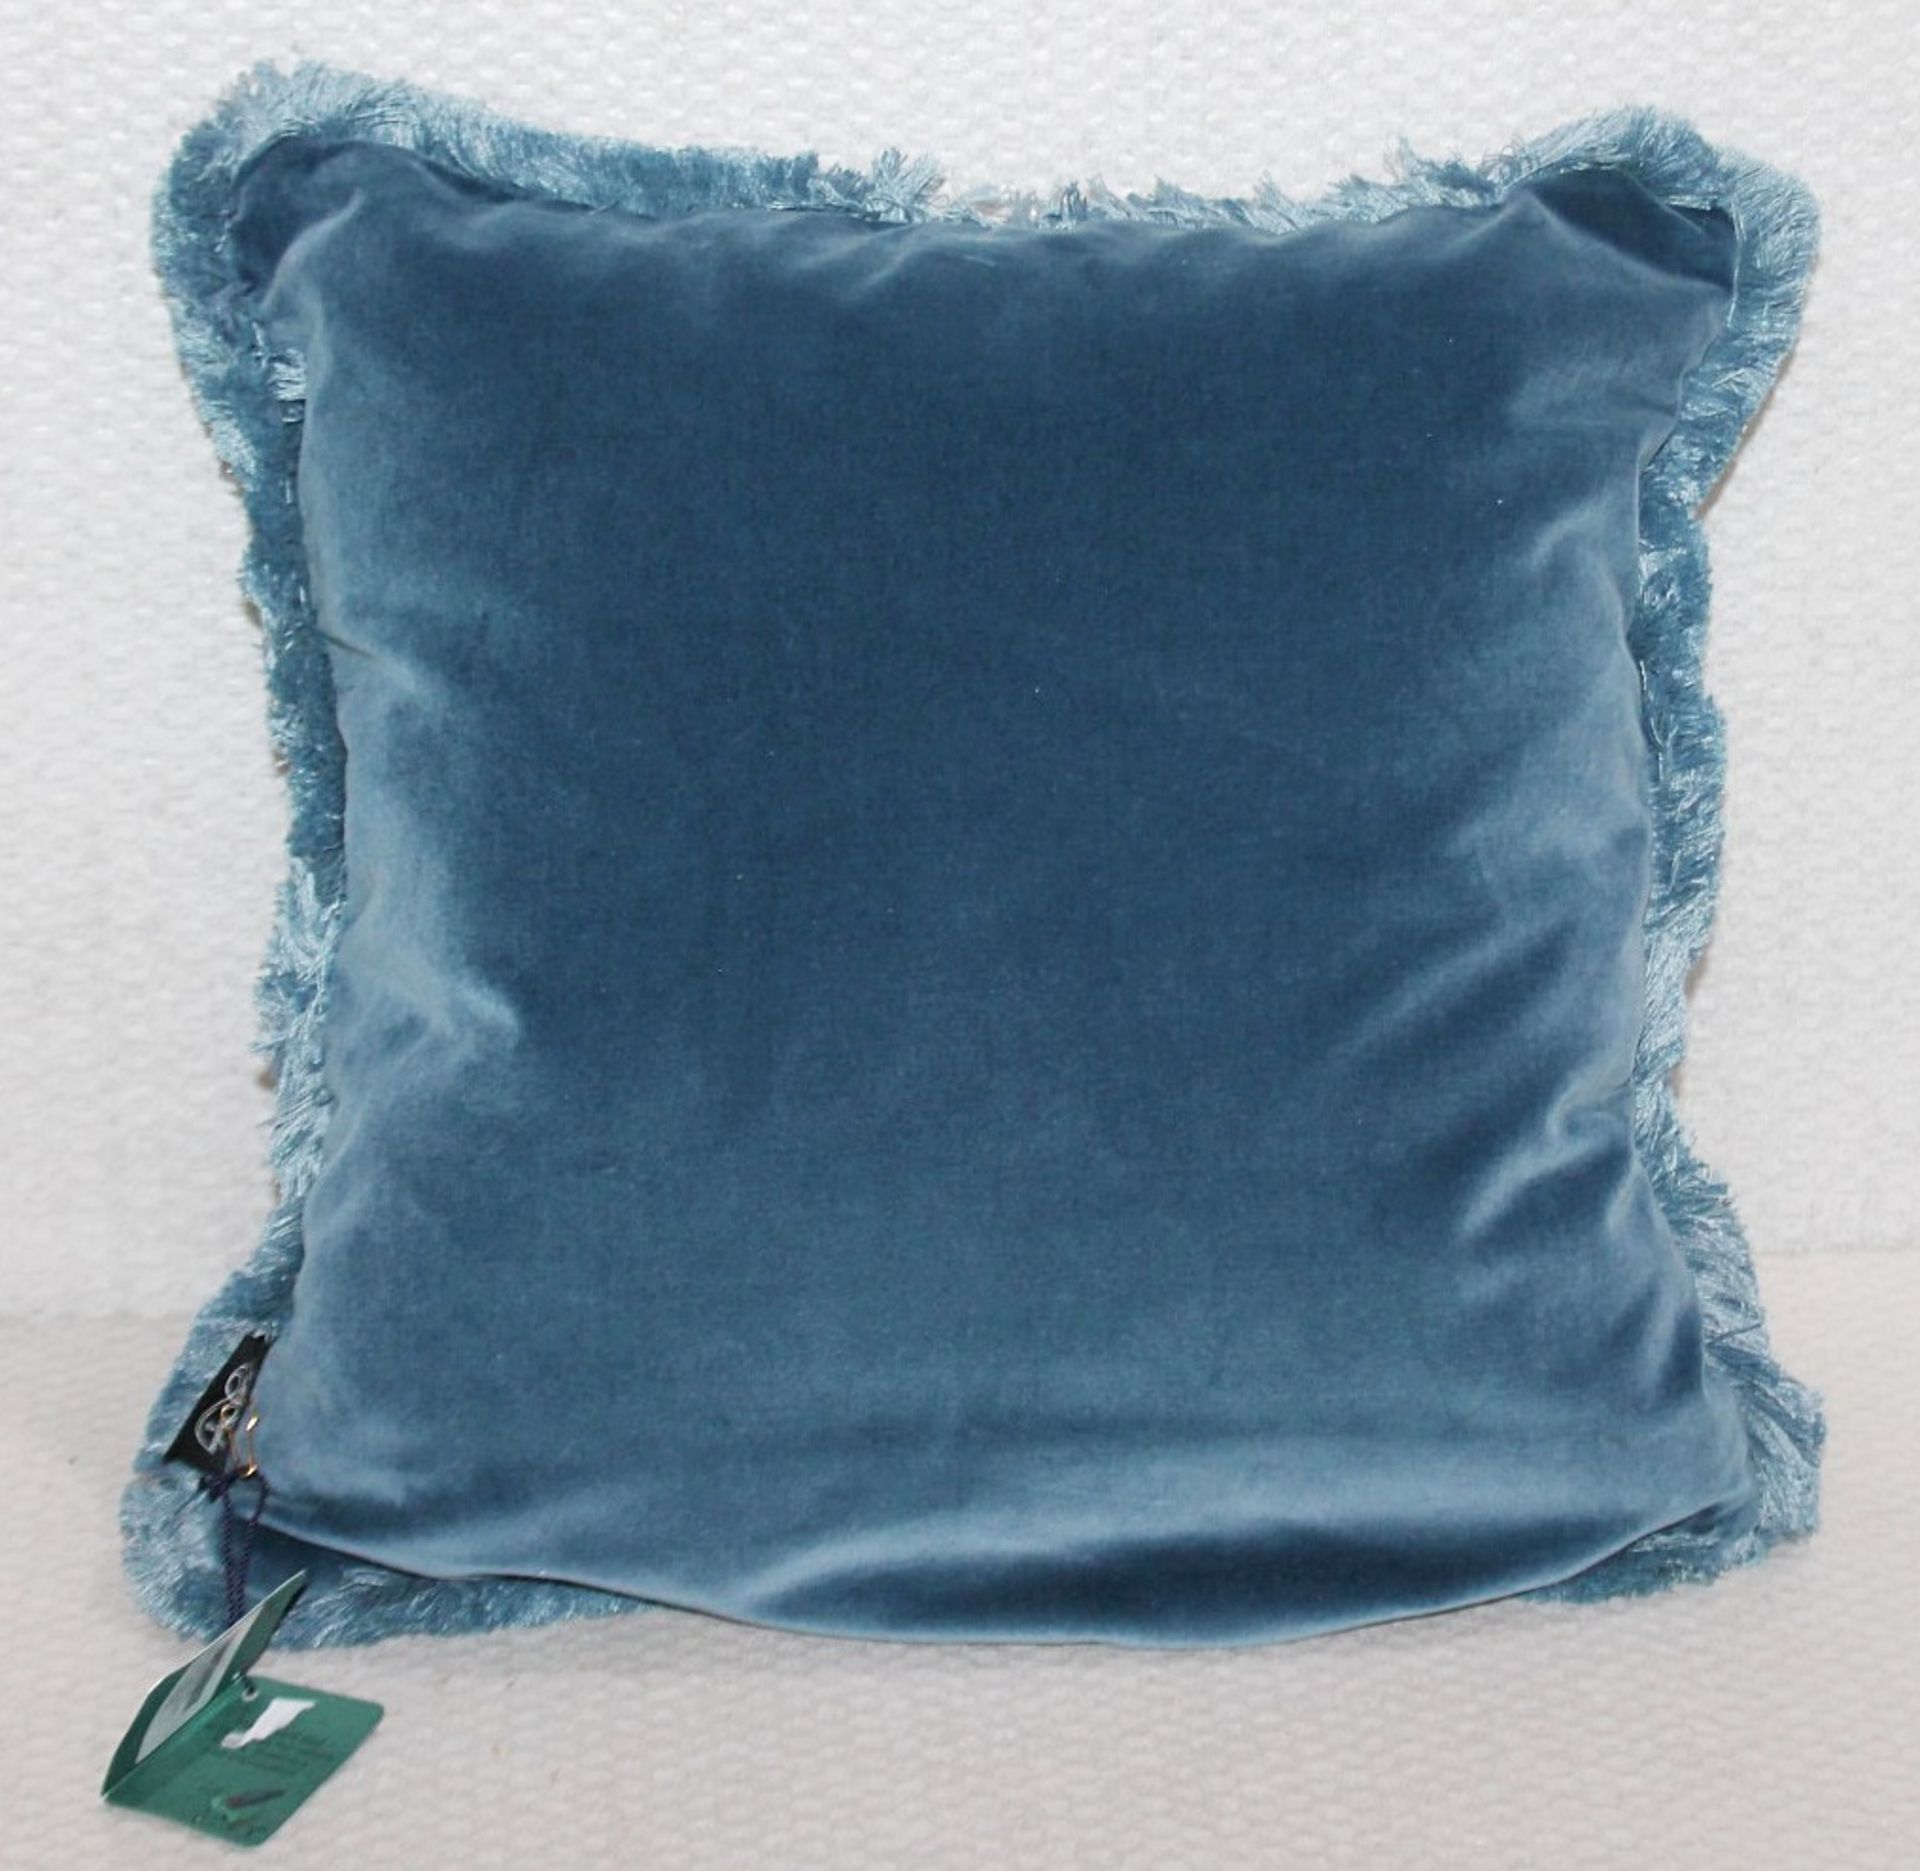 1 x EMMA J SHIPLEY 'Lost World' Square Designer Cushion (43cm x 43cm) - Original Price £75.00 - Image 7 of 8